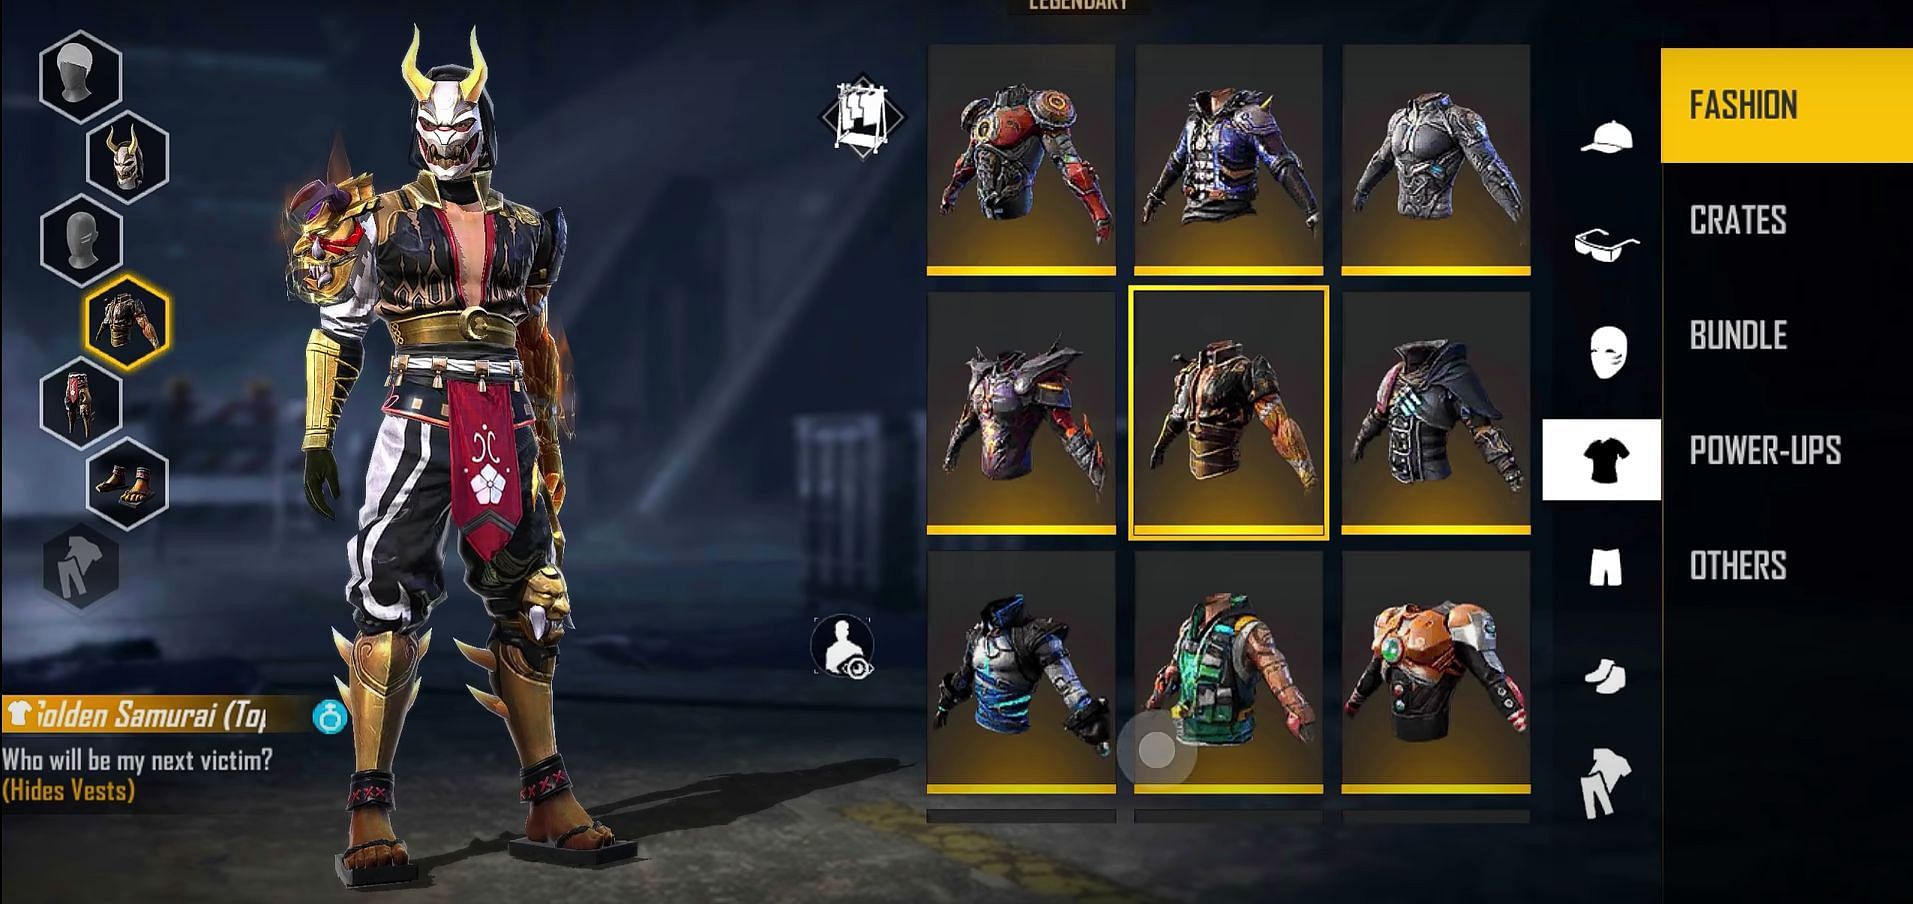 Golden Samurai skin (Image via Total Gaming; YouTube)